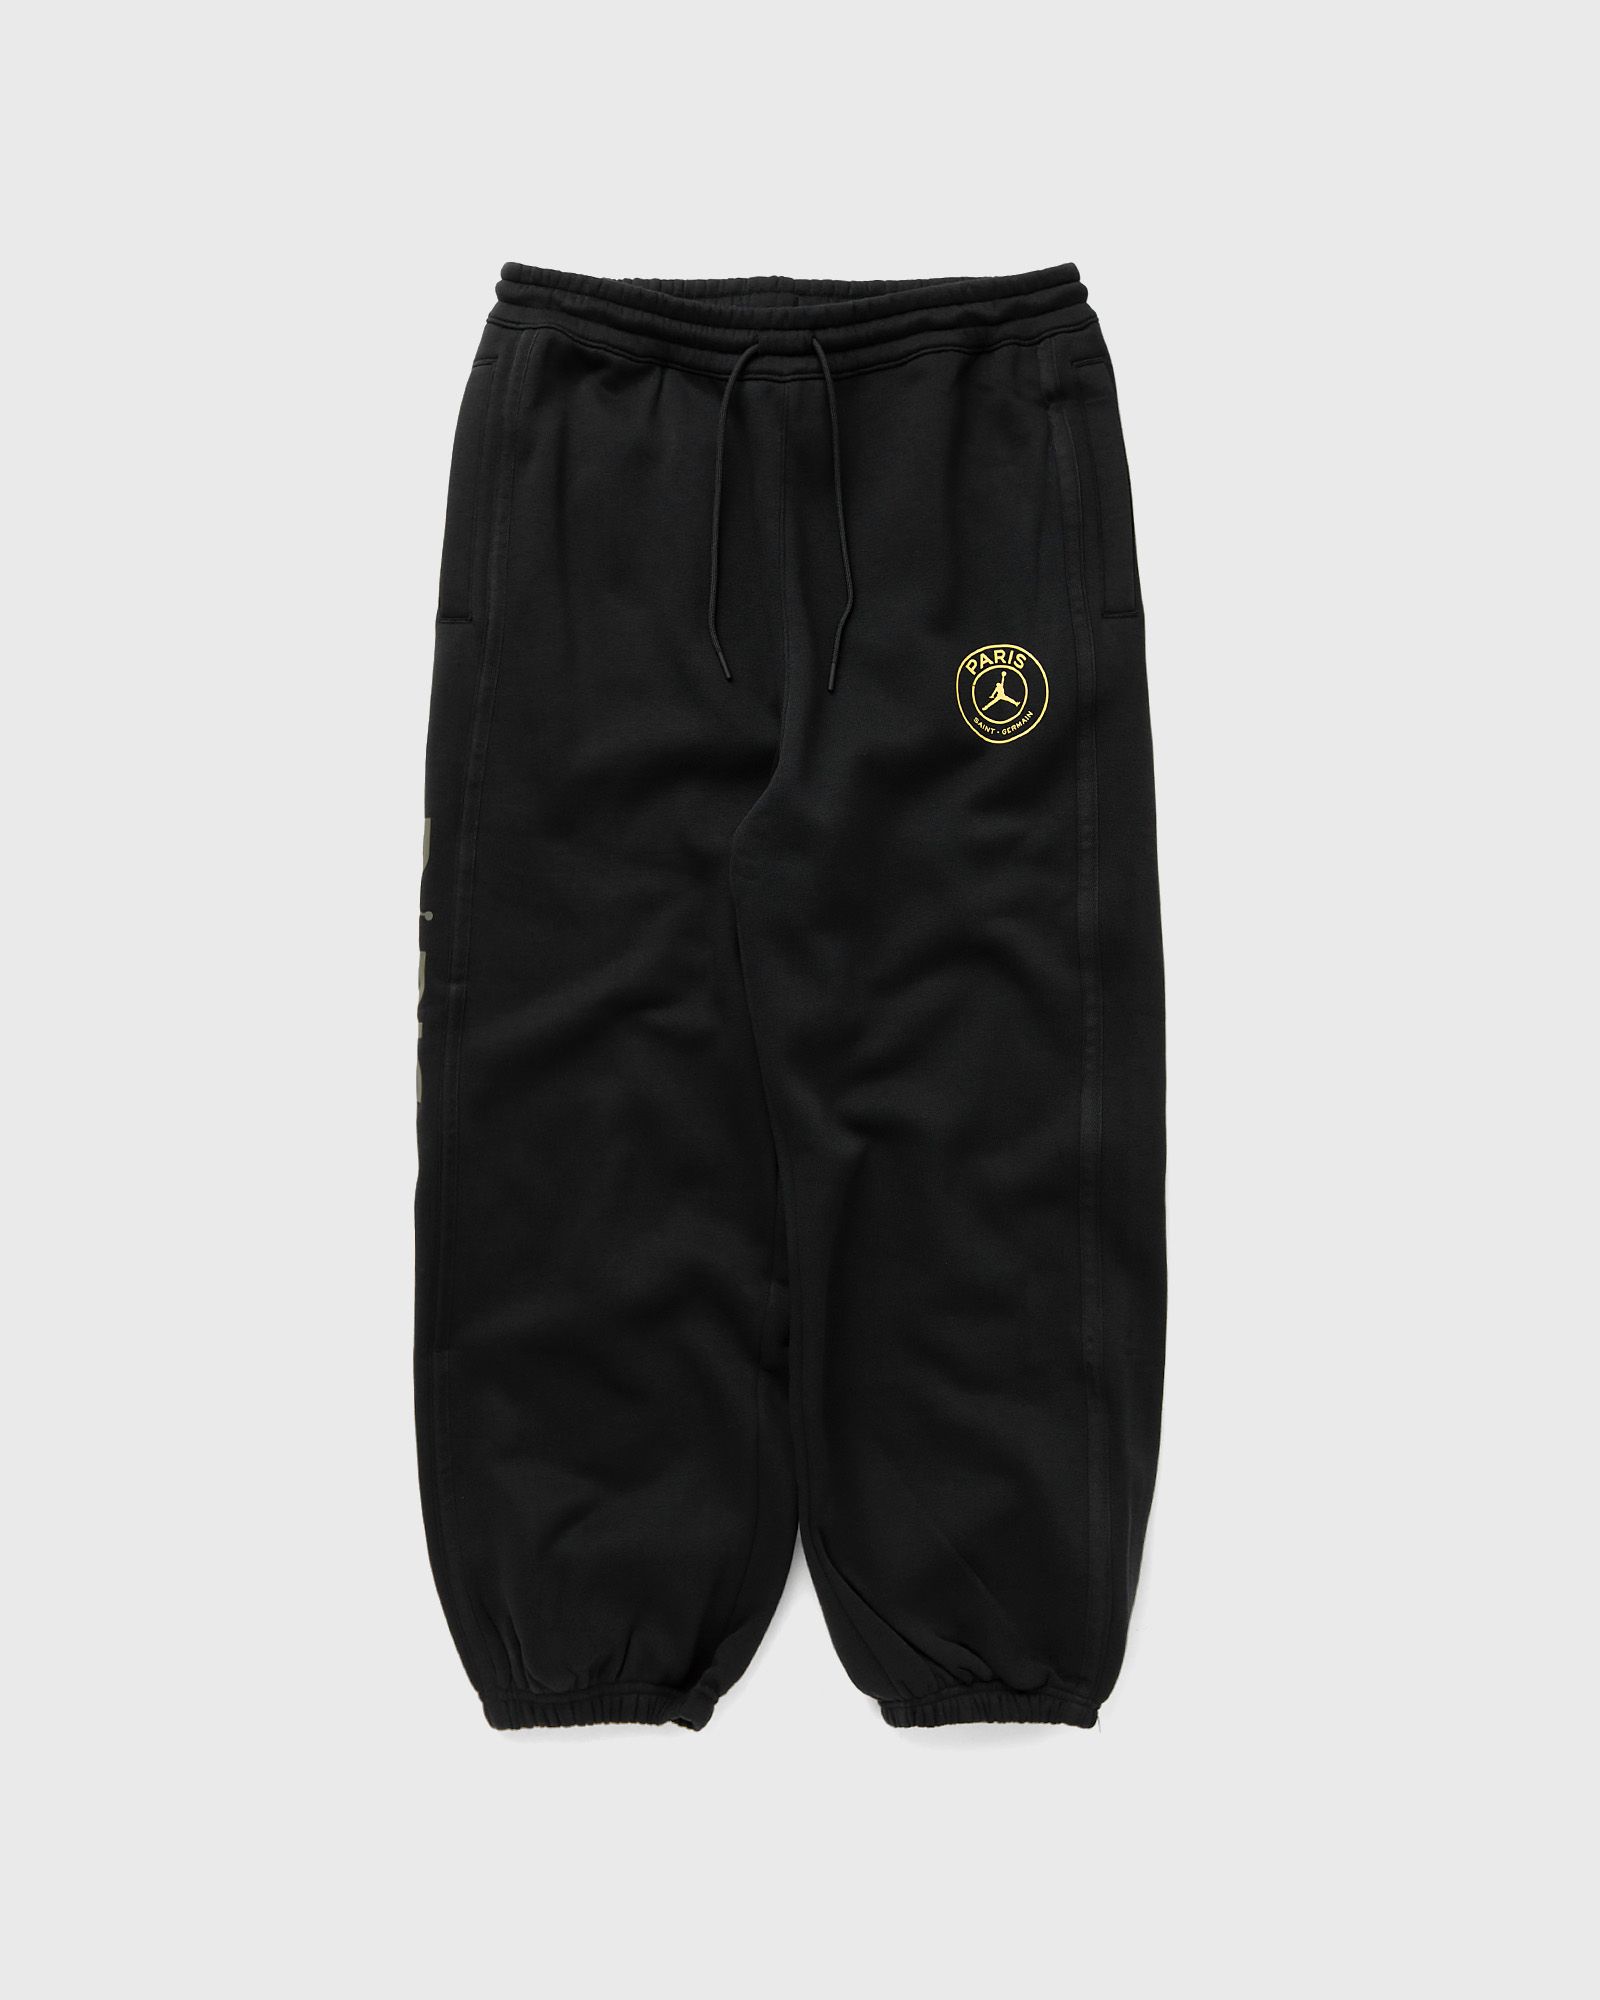 Jordan Paris Saint-Germain Fleece Sweatpants men Sweatpants black in Größe:M von Jordan